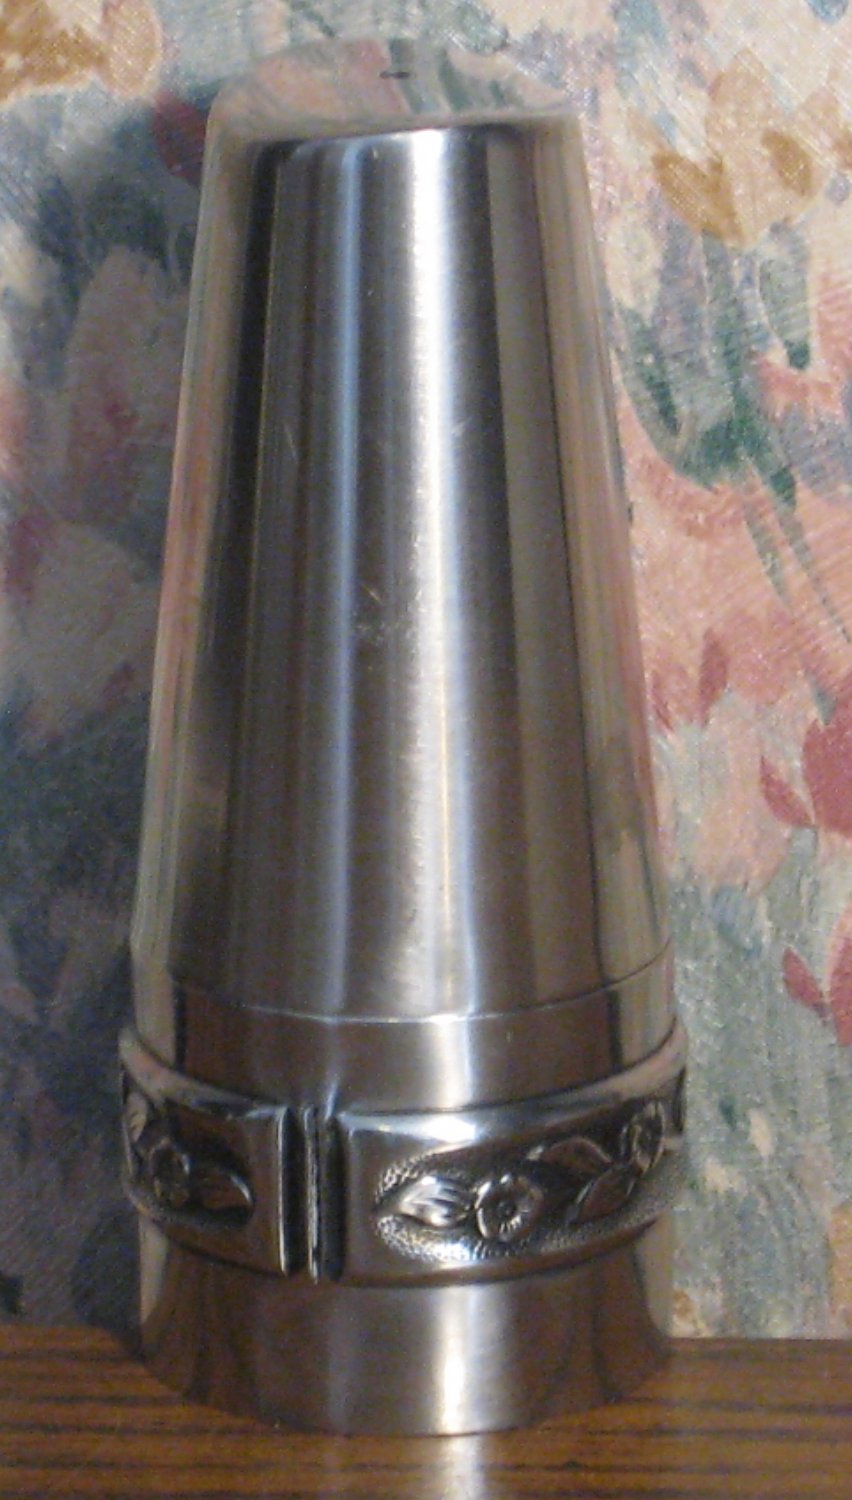 Rogers Insilco Stainless Steel Pepper Shaker - 3.5" x 1.25" - 1970s / 1980s Vintage